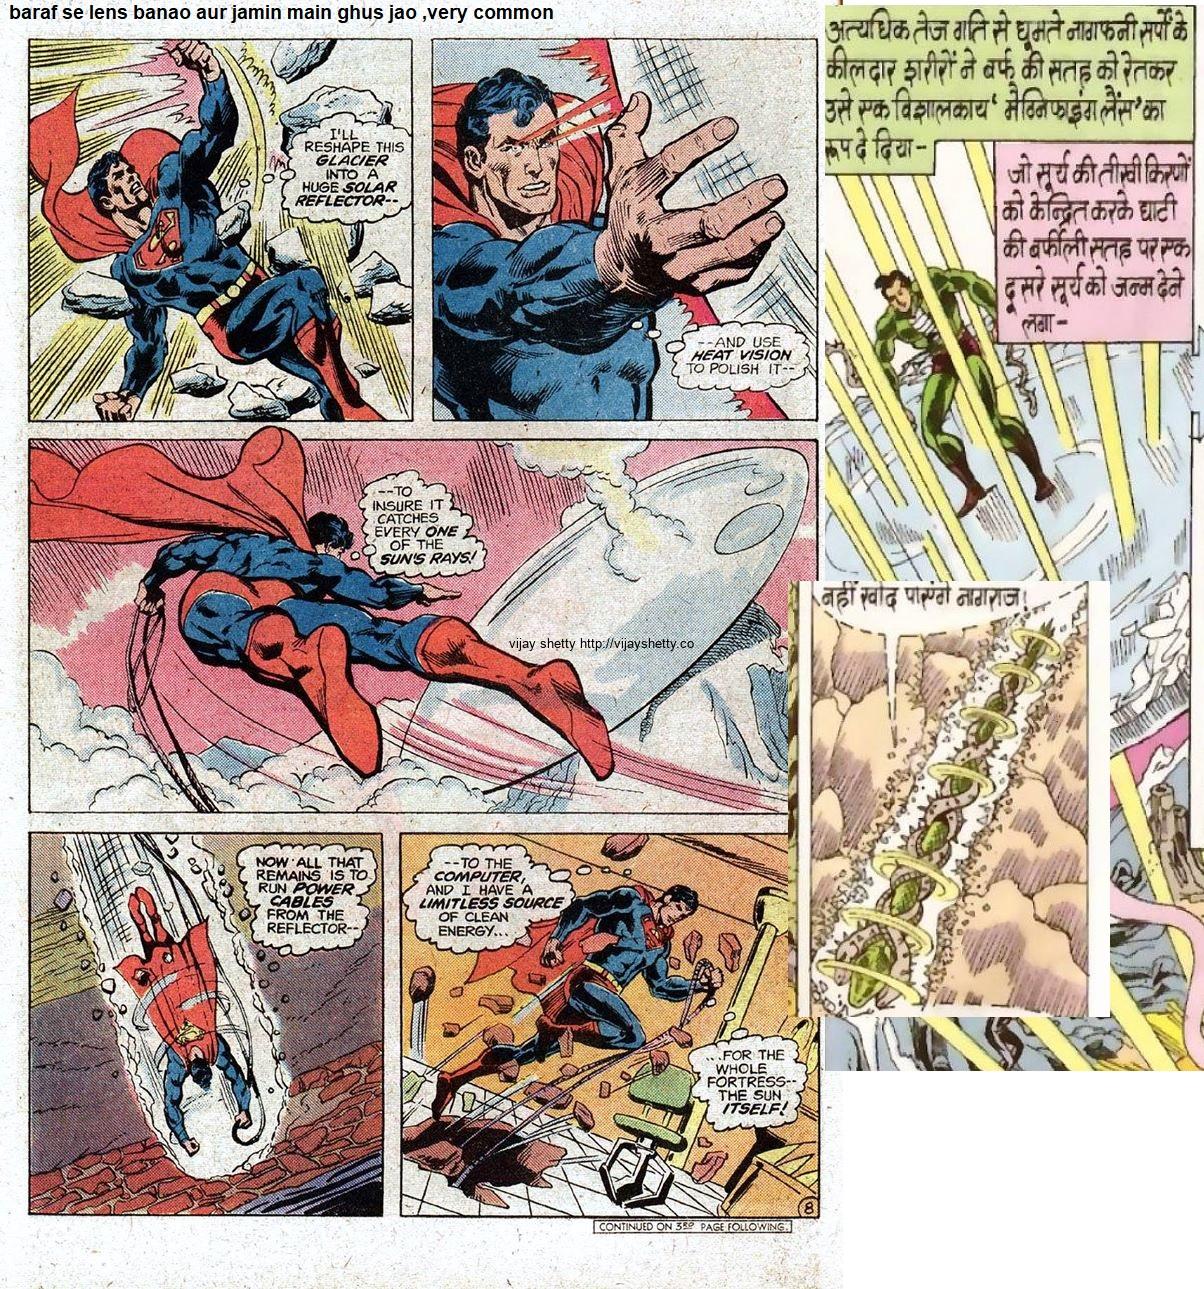 Nagraj Fun comcis copied rrom superman and captain comet comics